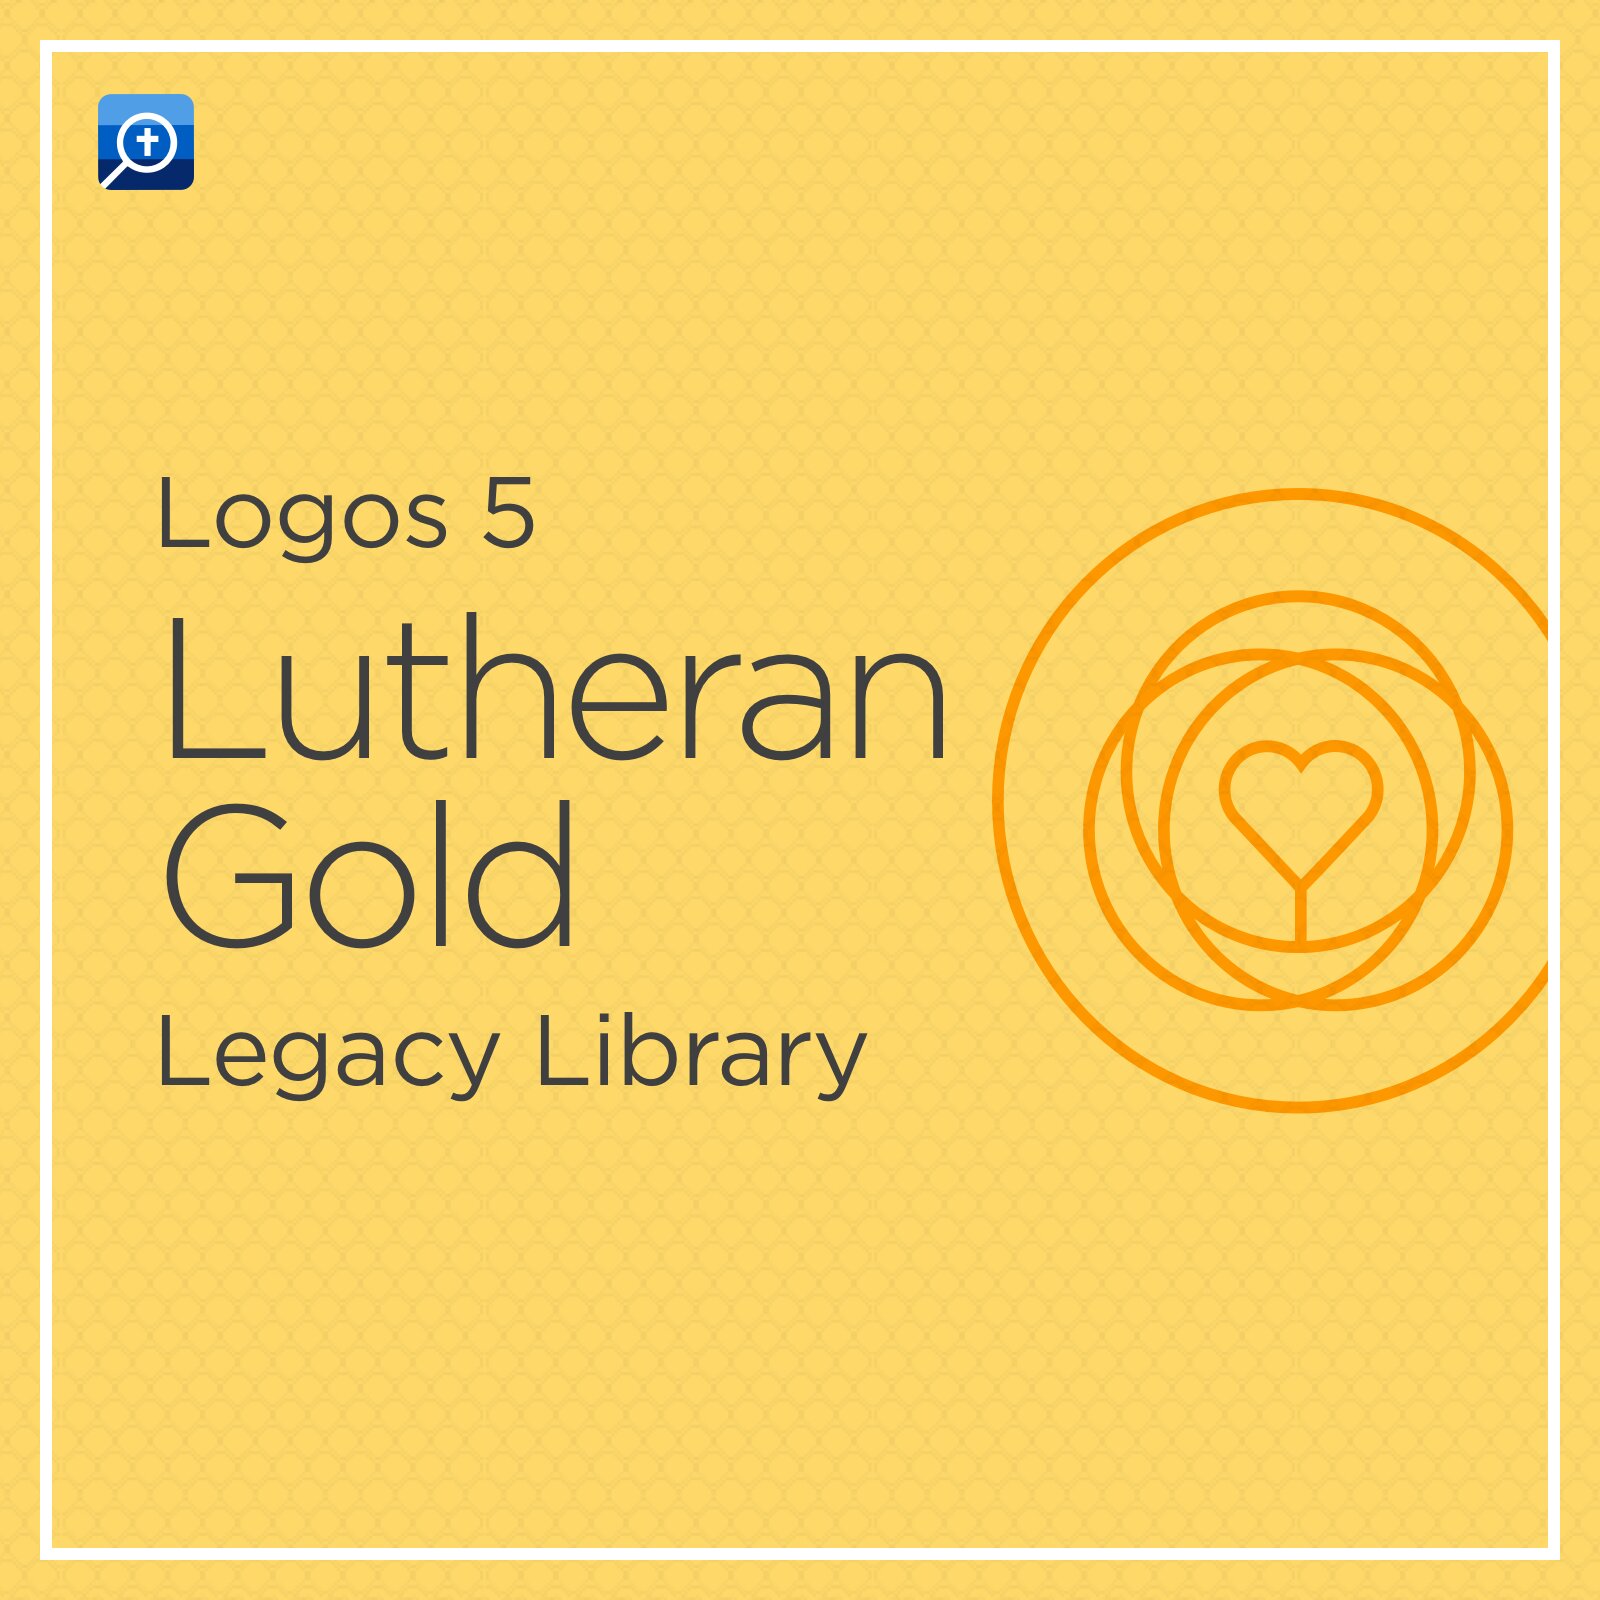 Logos 5 Lutheran Gold Legacy Library